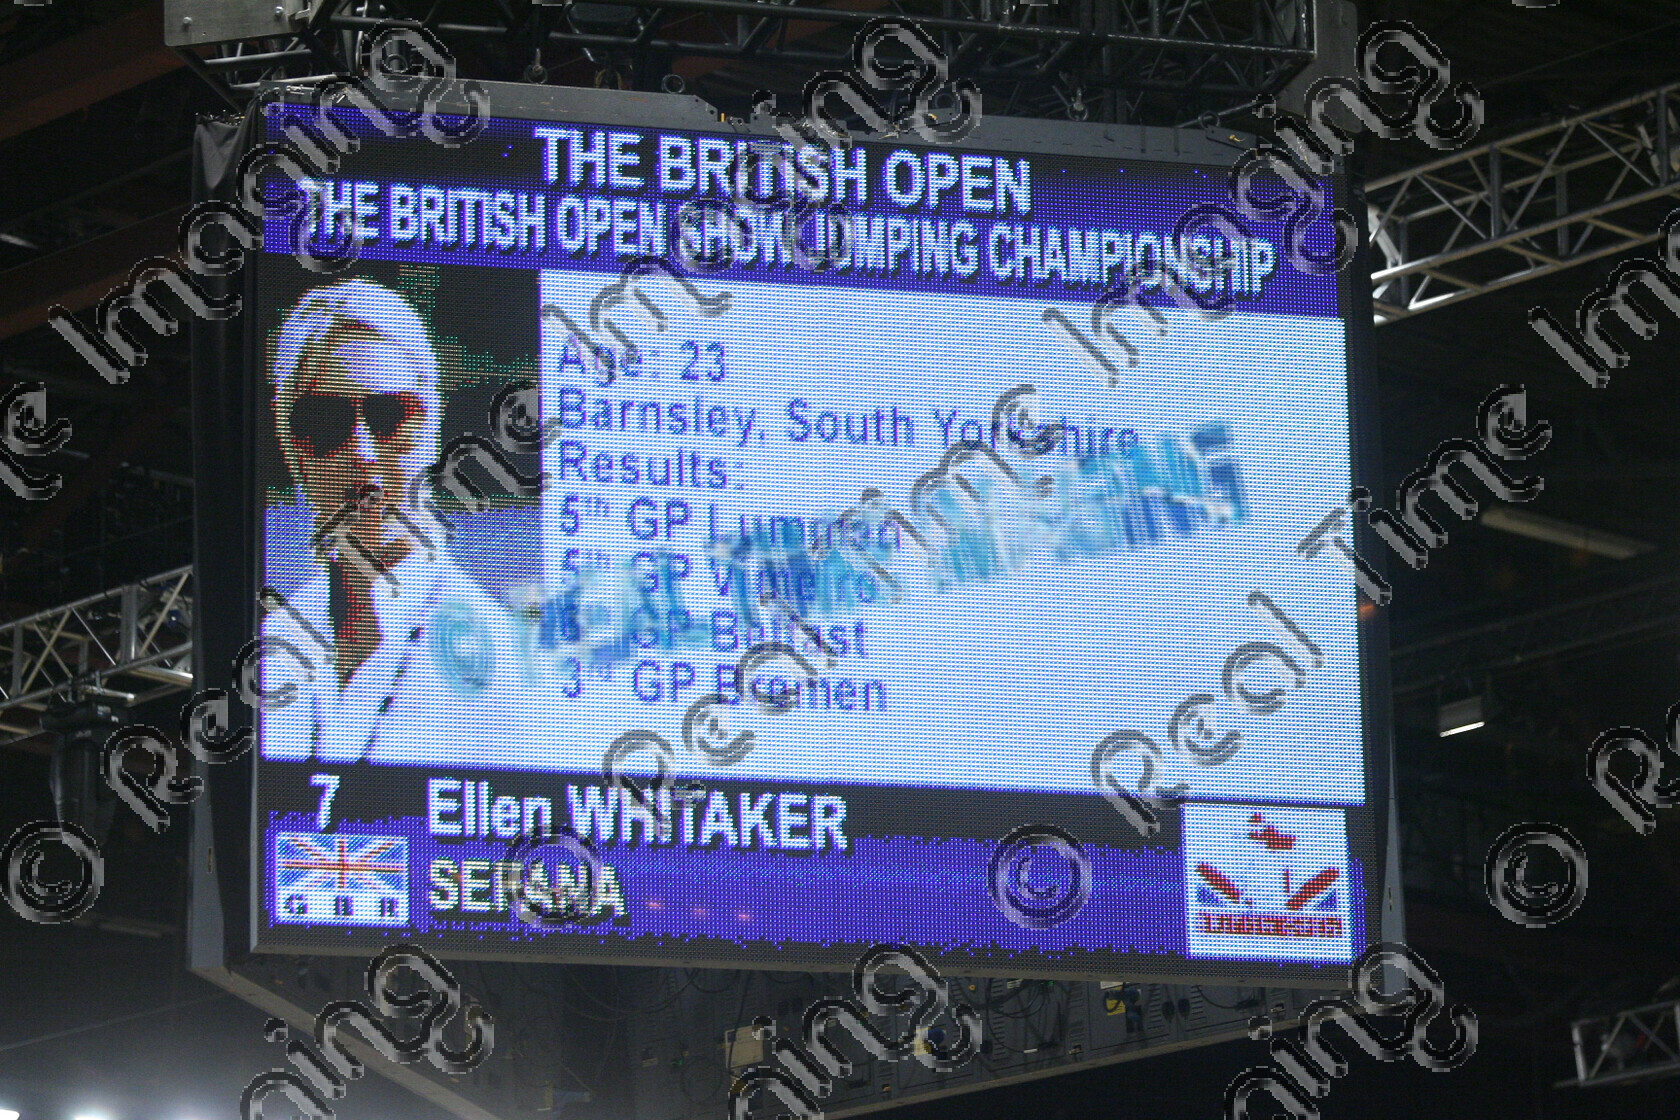 S09-15-05-068 
 Keywords: The British Open Showjumping Championships, LG Arena, NEC, Birmingham, UK, Saturday, 18, April, 2009, `Rider: , Ellen Whitaker, SEFANA